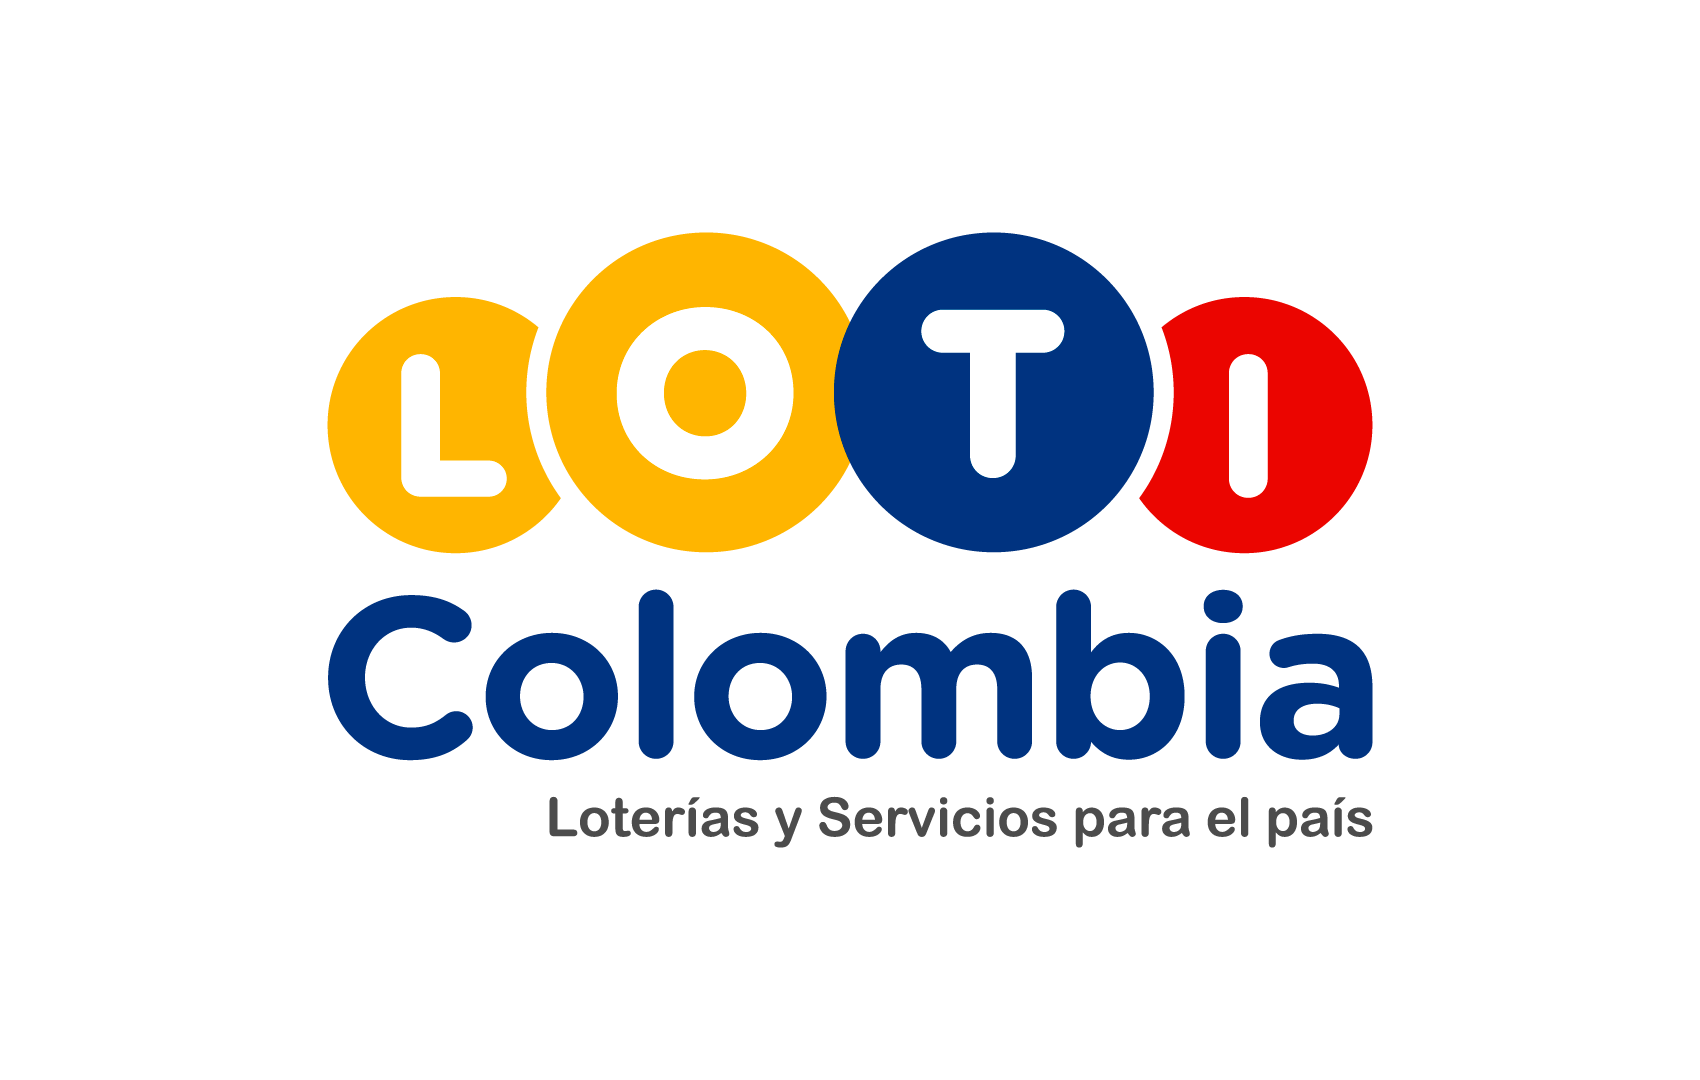 Loti Colombia